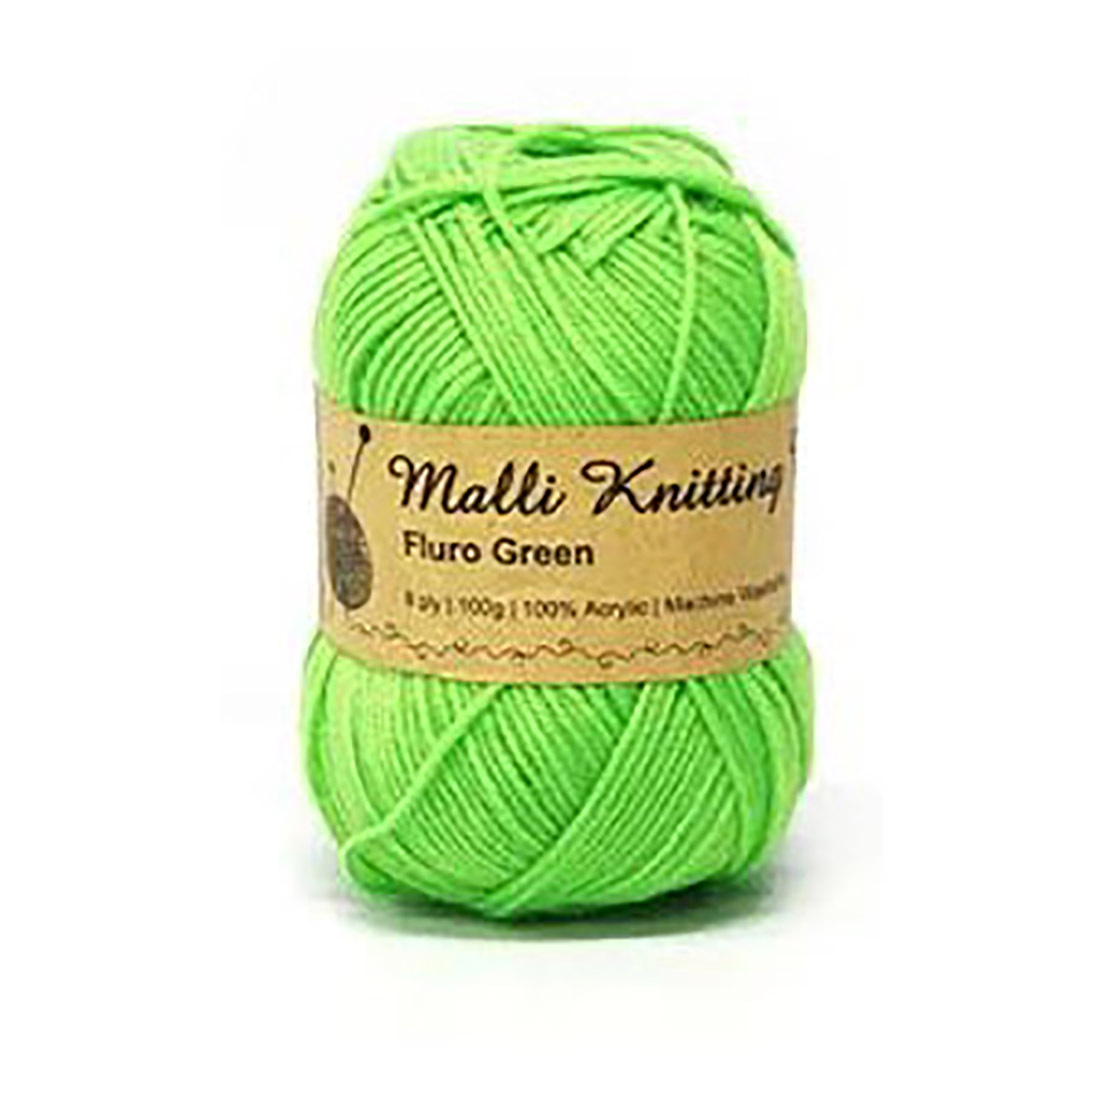 Knitting Yarn 8 Ply 100gm Fluro Green